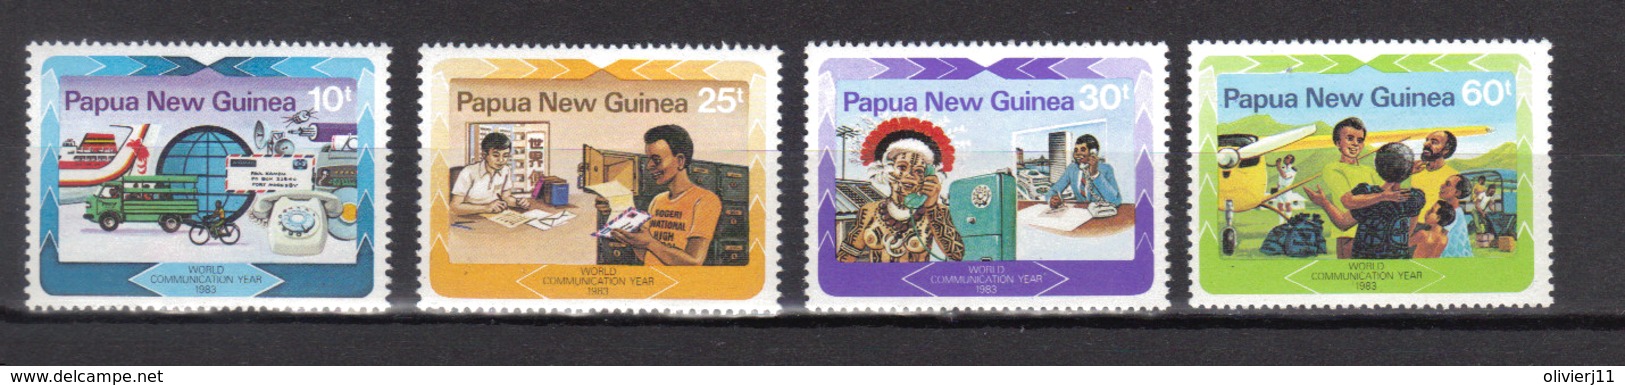 PAPOUASIE Nll GUINEE N° 458 à 461 Neufs** Cote 4€ - Papouasie-Nouvelle-Guinée